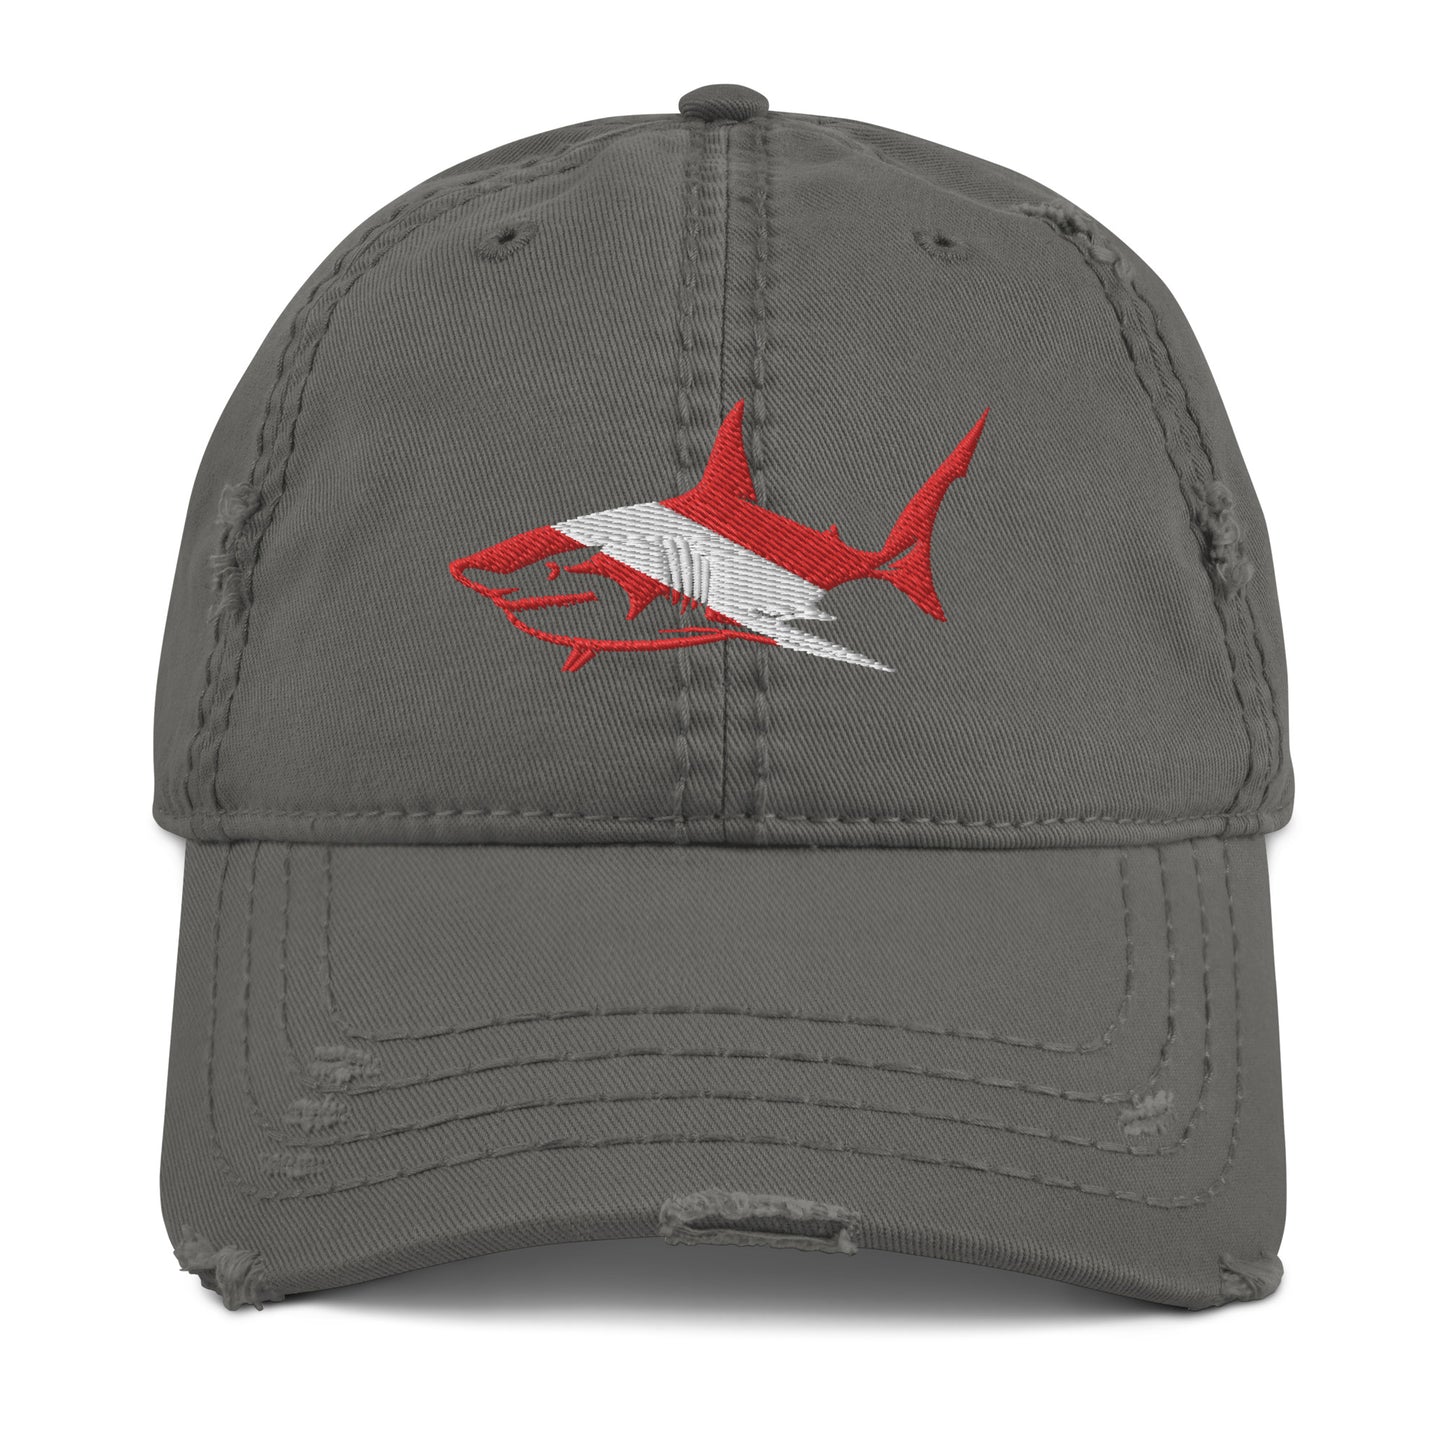 Distressed Shark Hat